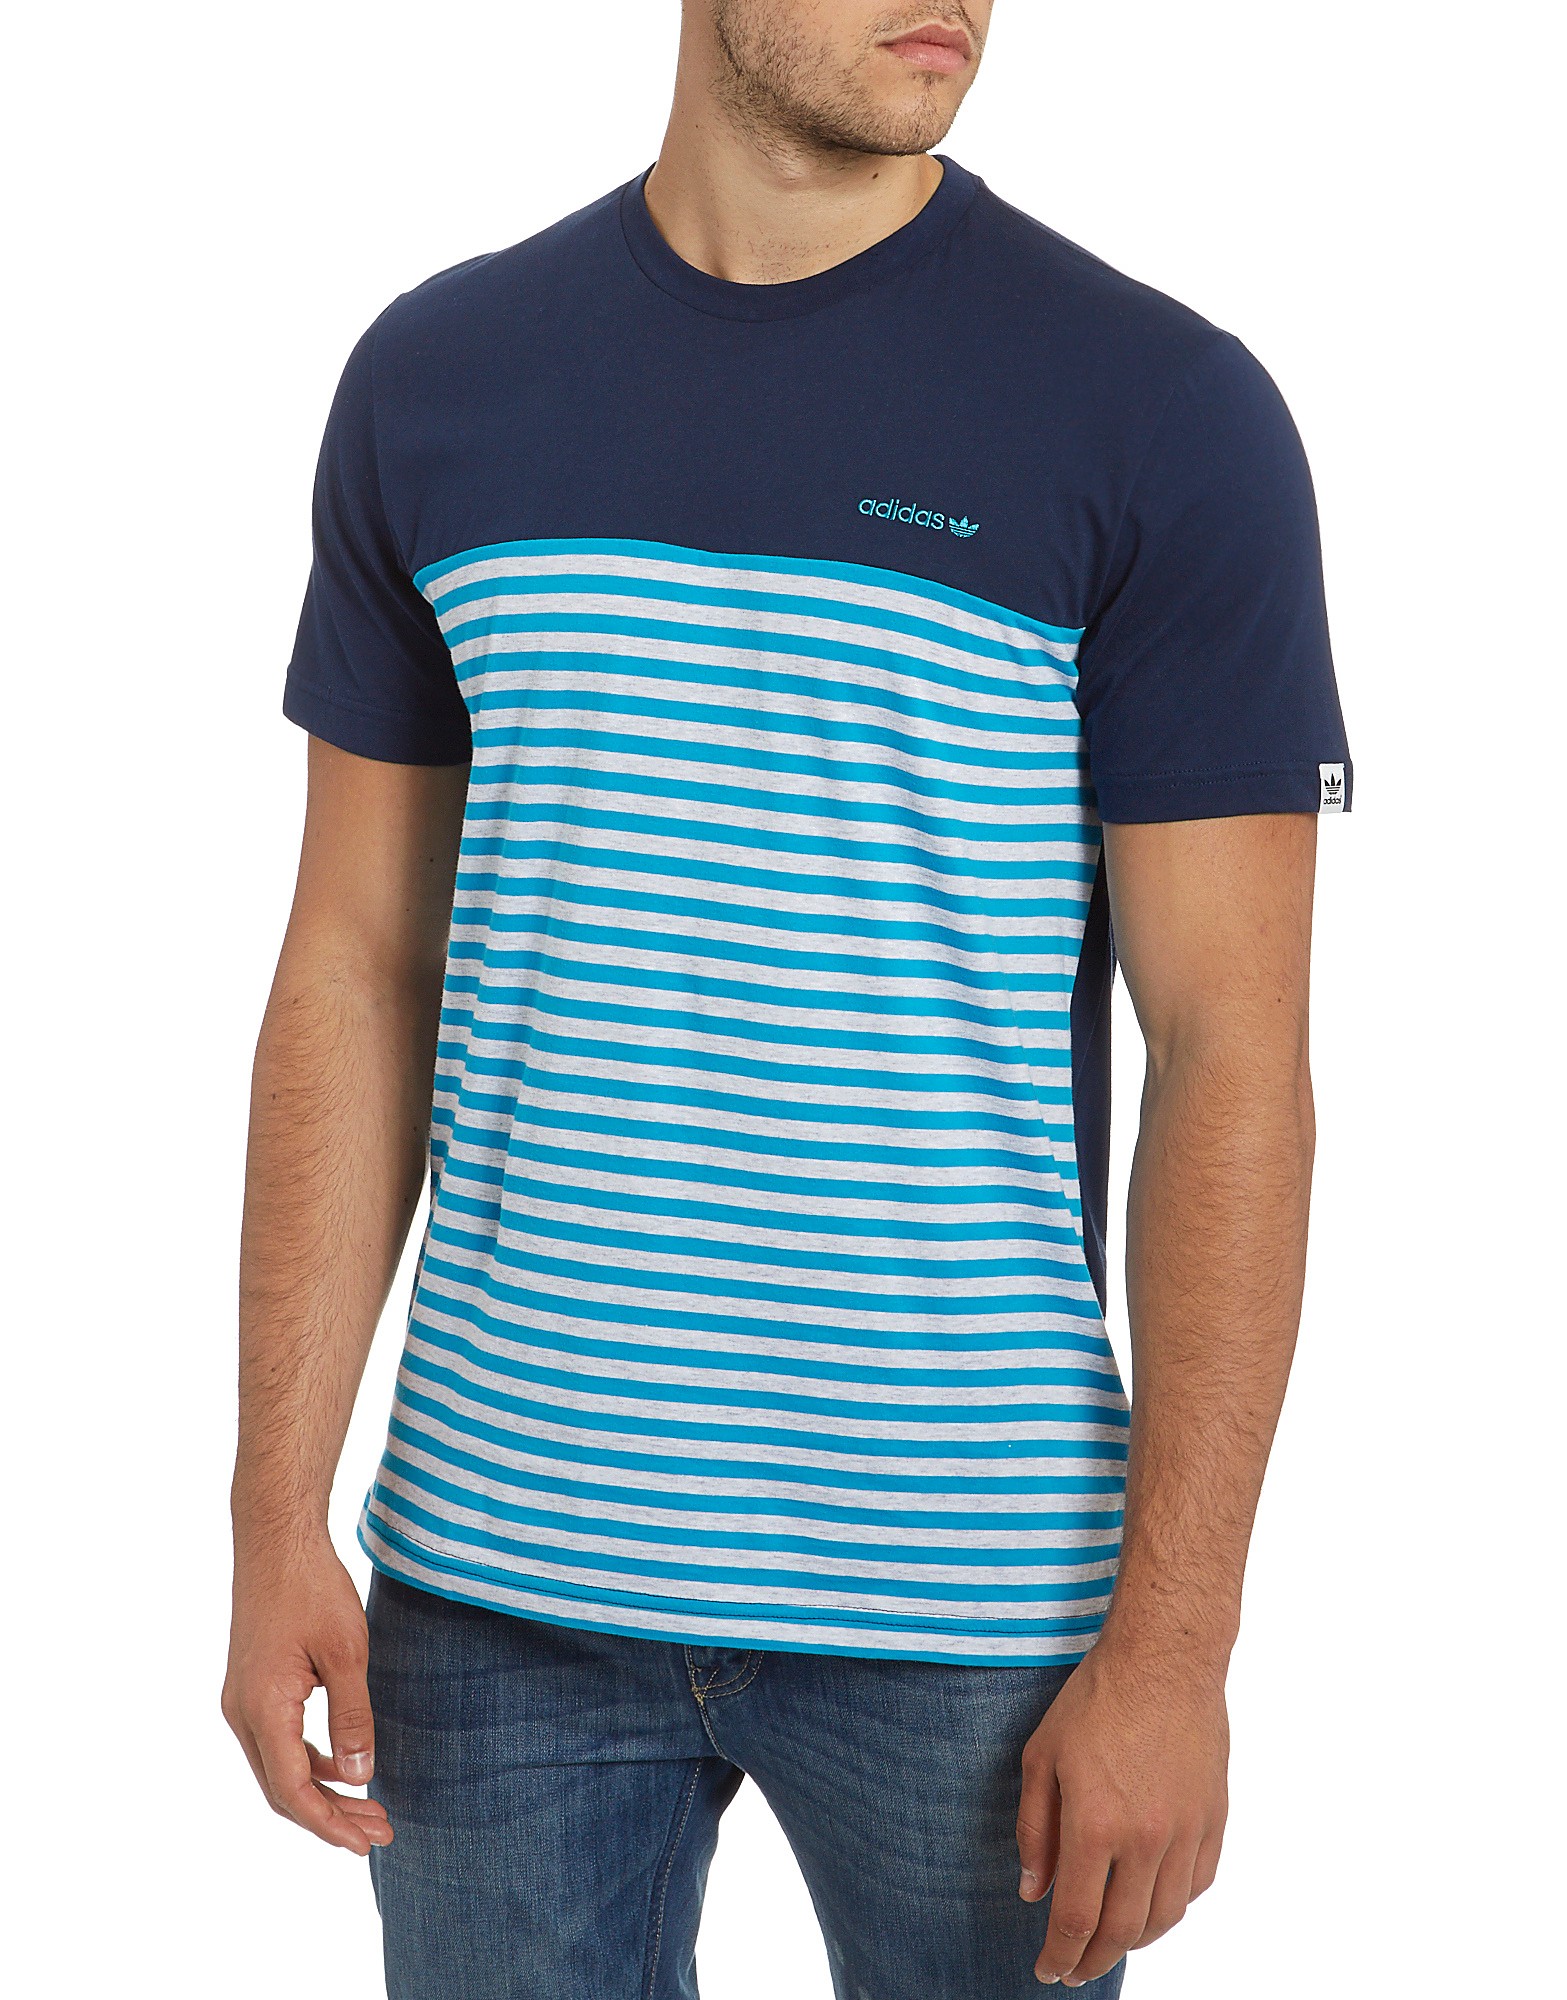 adidas Originals Trefoil Stripe T-shirt